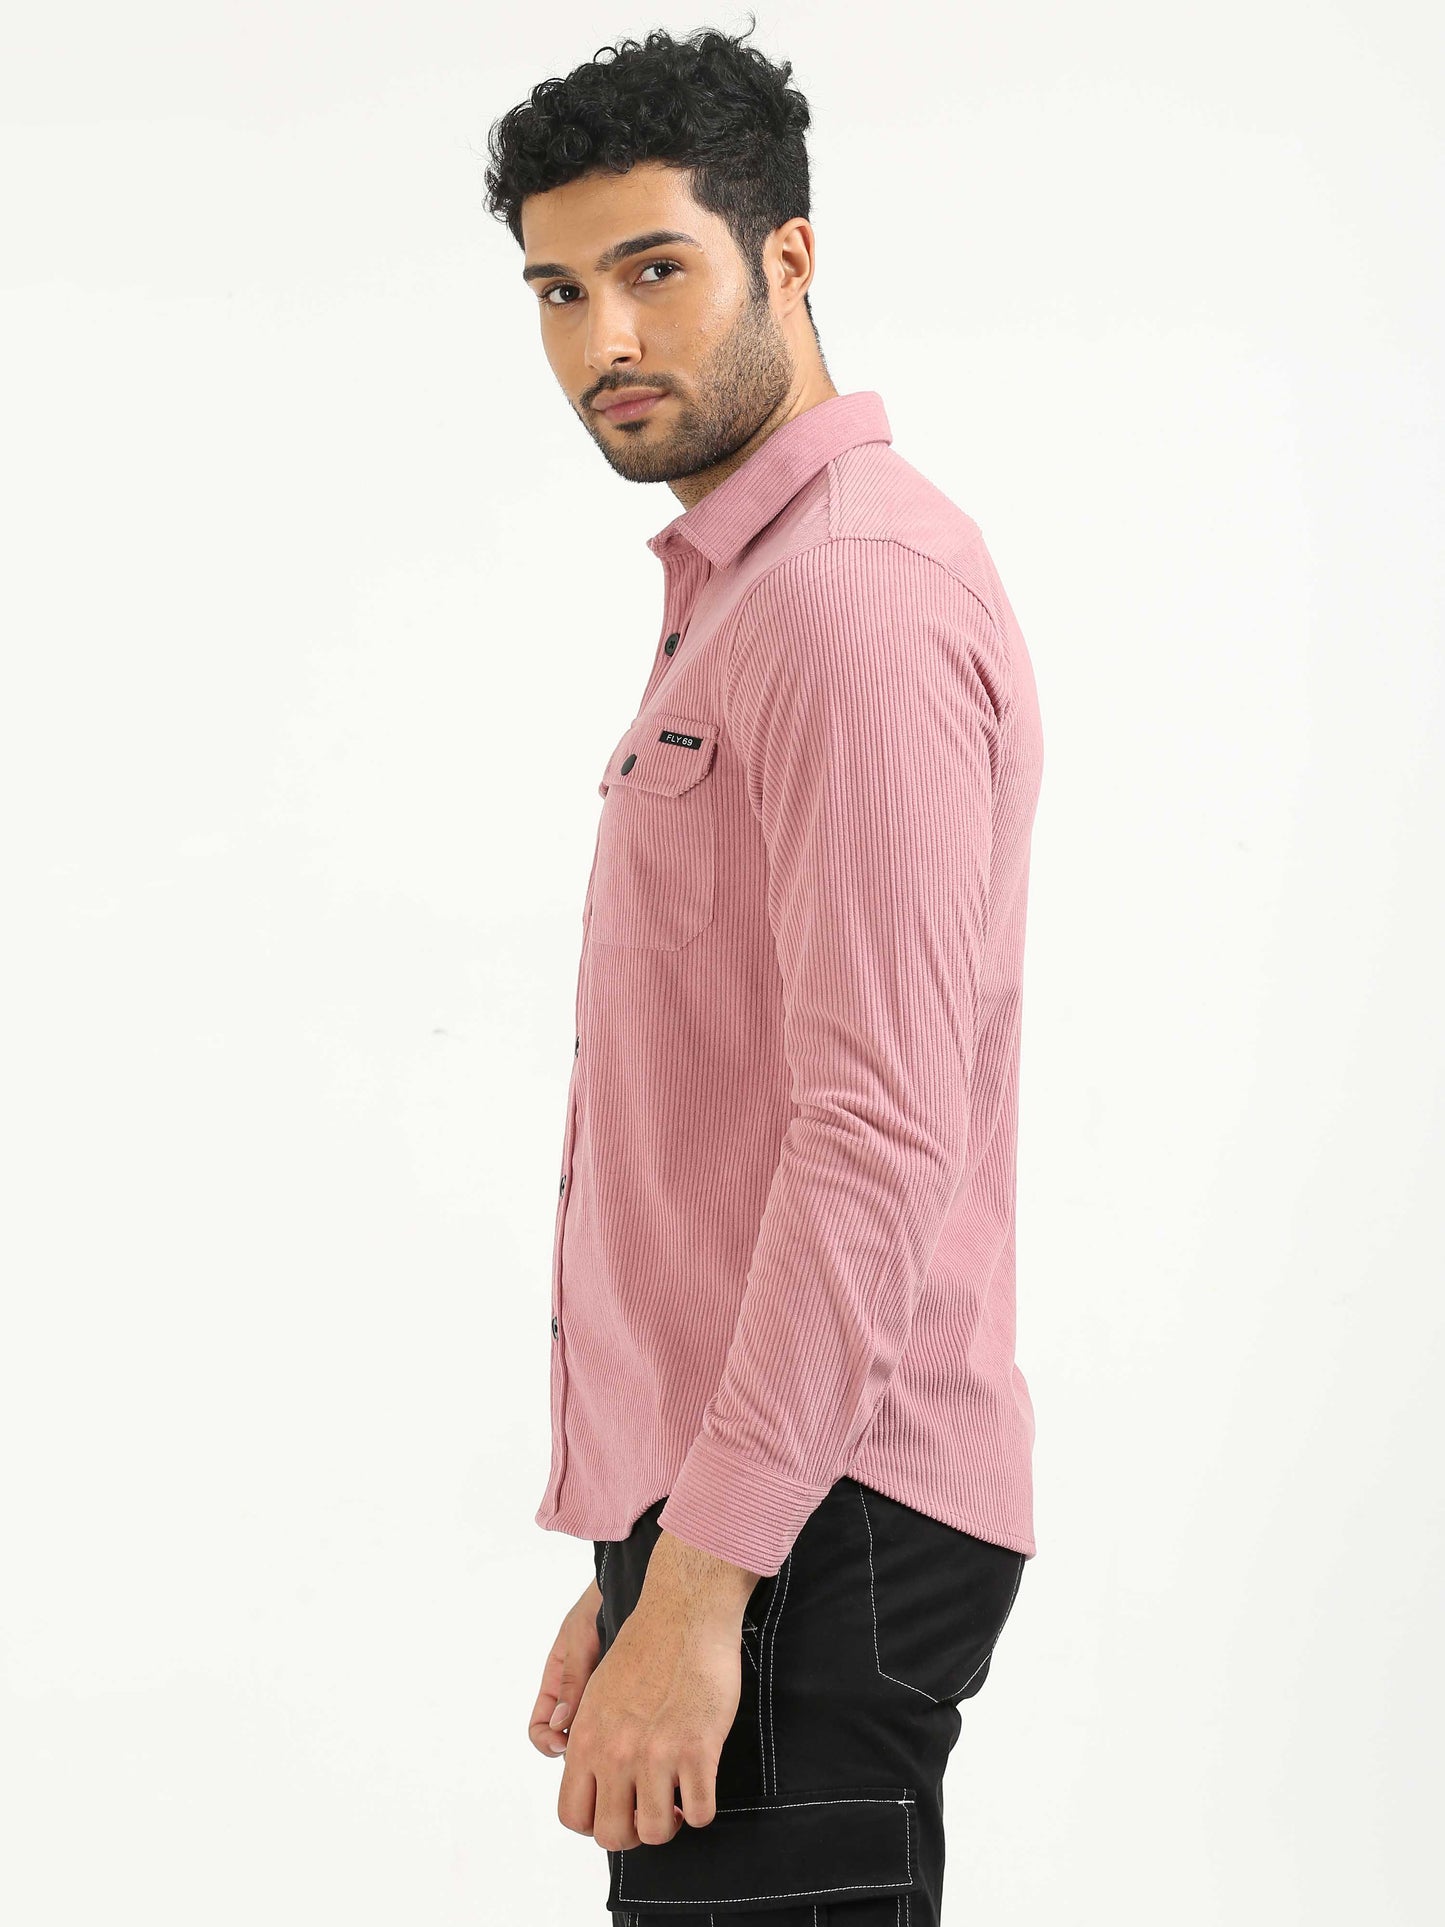 Pearl Pink Corduroy Shirt